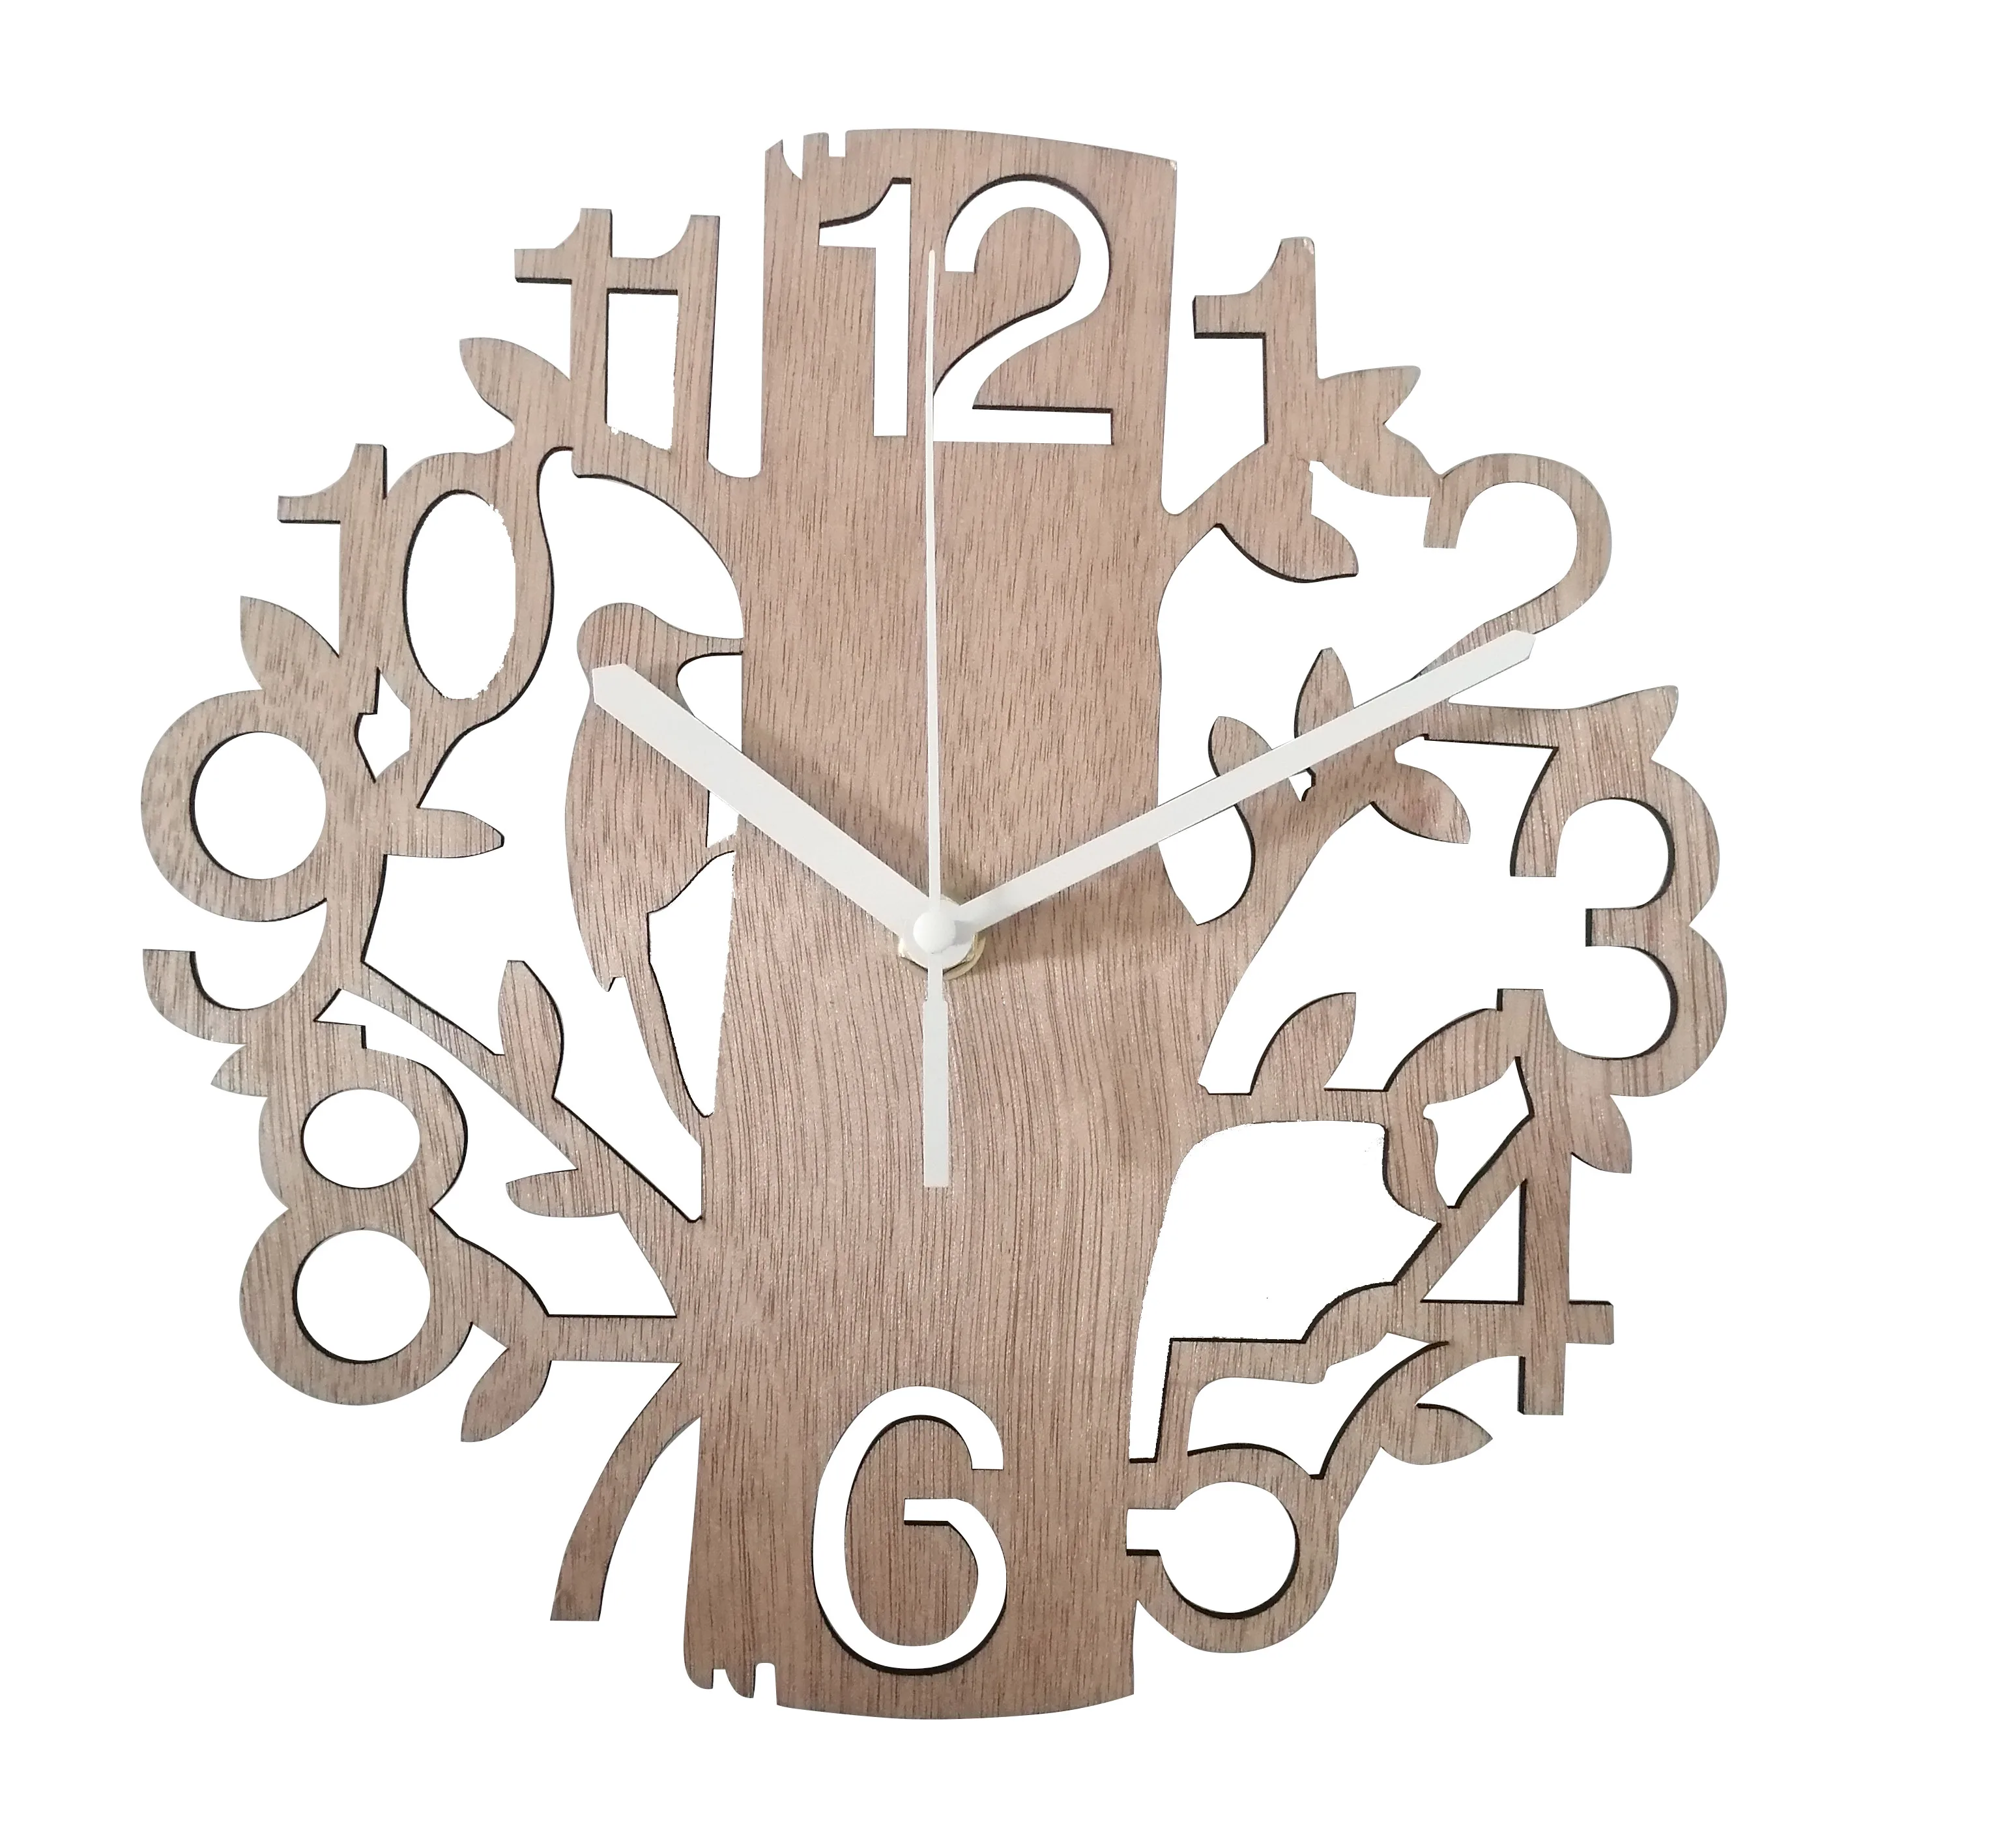 Wooden Clock Bird Tree Pattern Wall Clock Round Simplicity Hanging Clock for Hom 